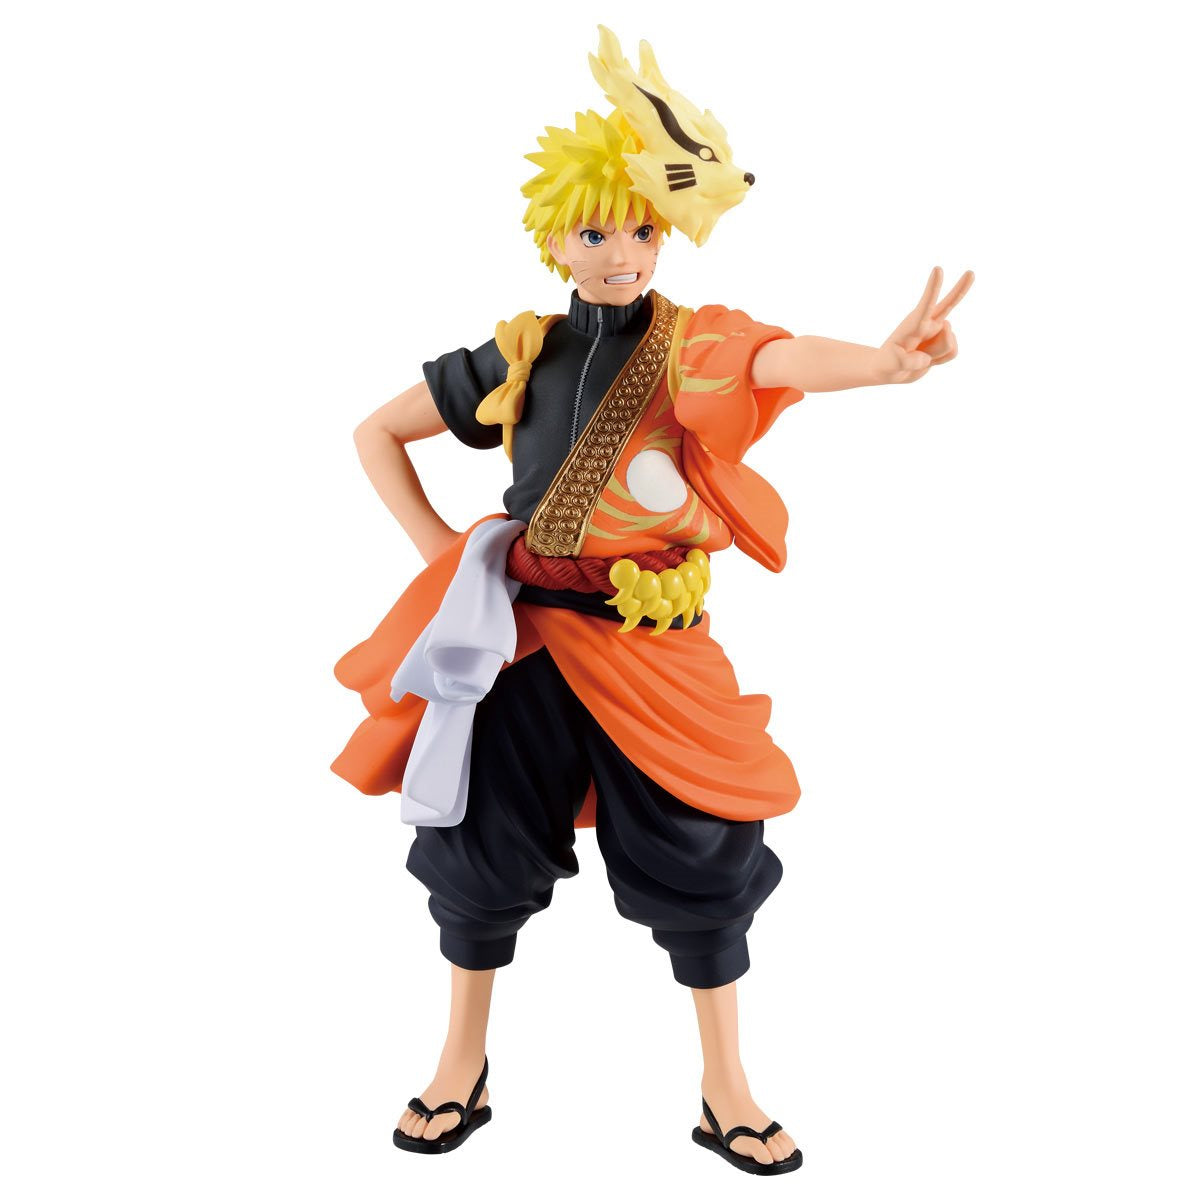 Naruto - Naruto Uzumaki  20th Anniversary Costume Statue